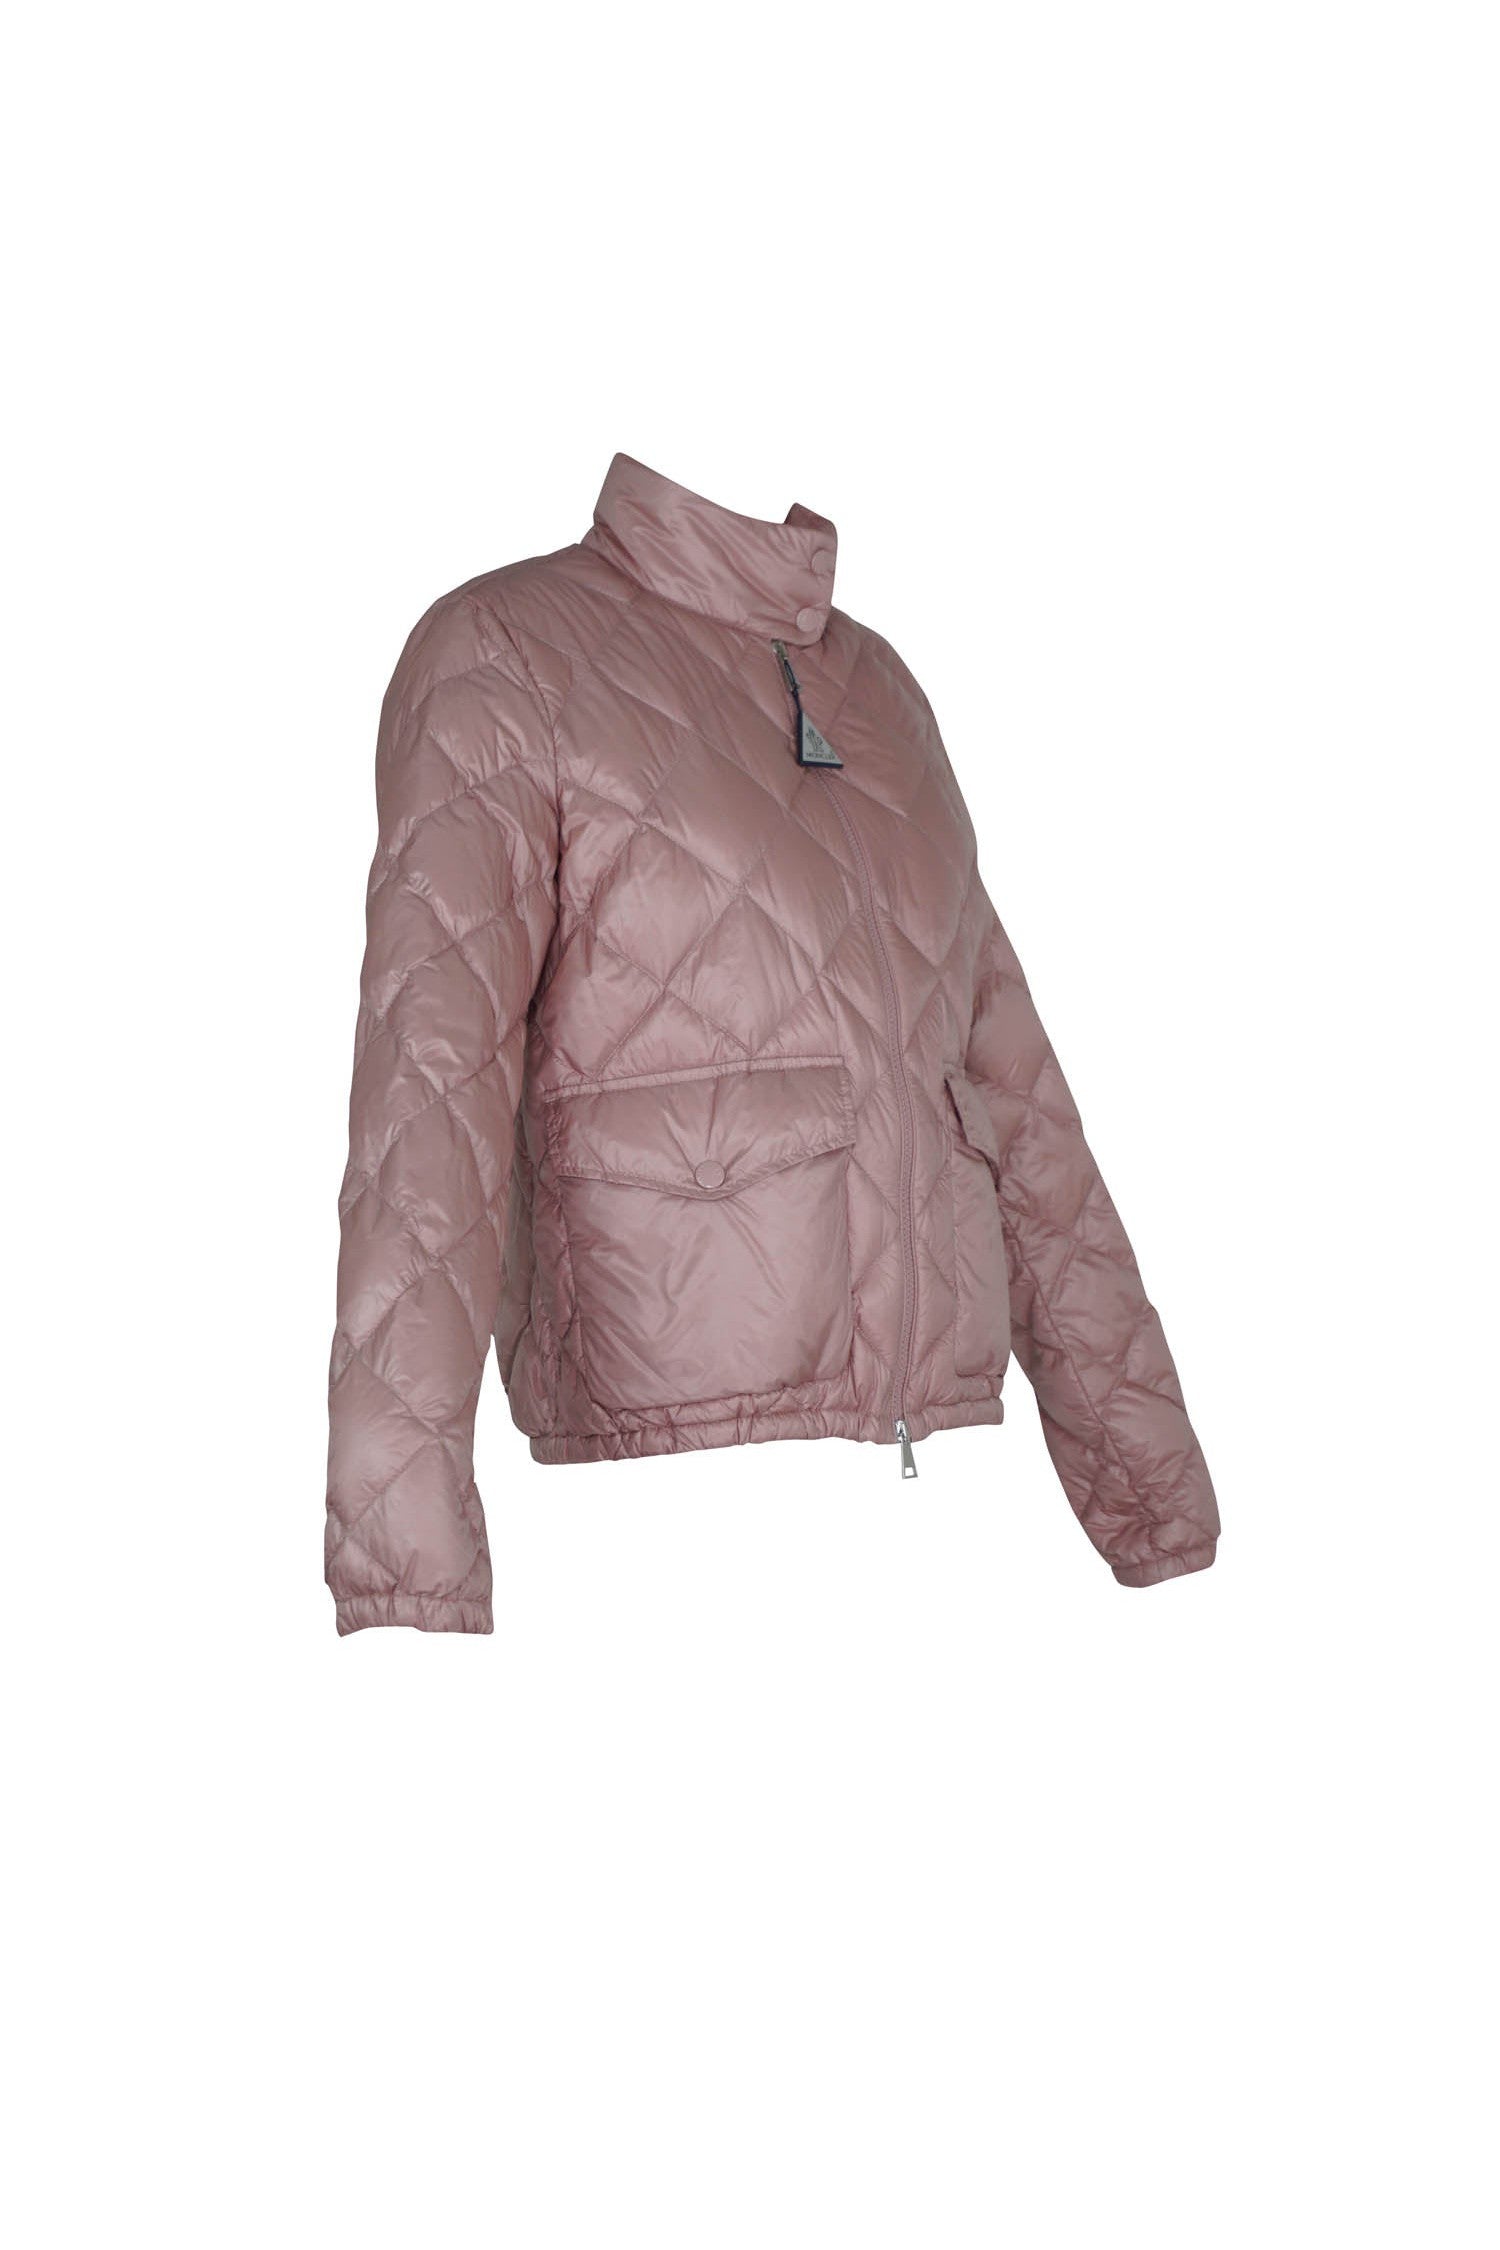 Moncler Dusty Rose Technical Zip Jacket Sz 3/Medium - Foxy Couture Carmel